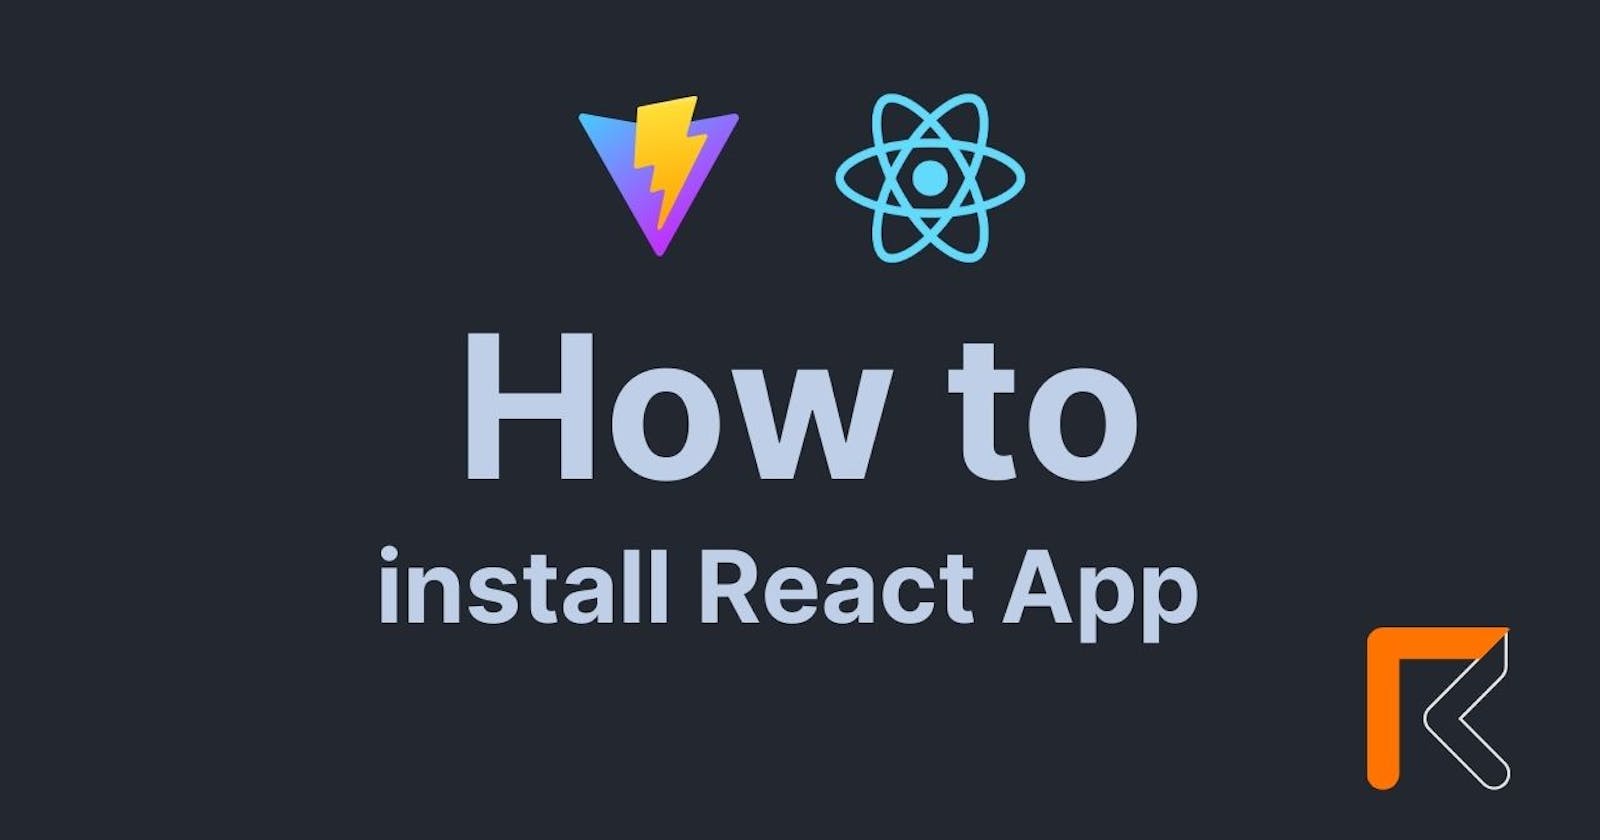 Install React App